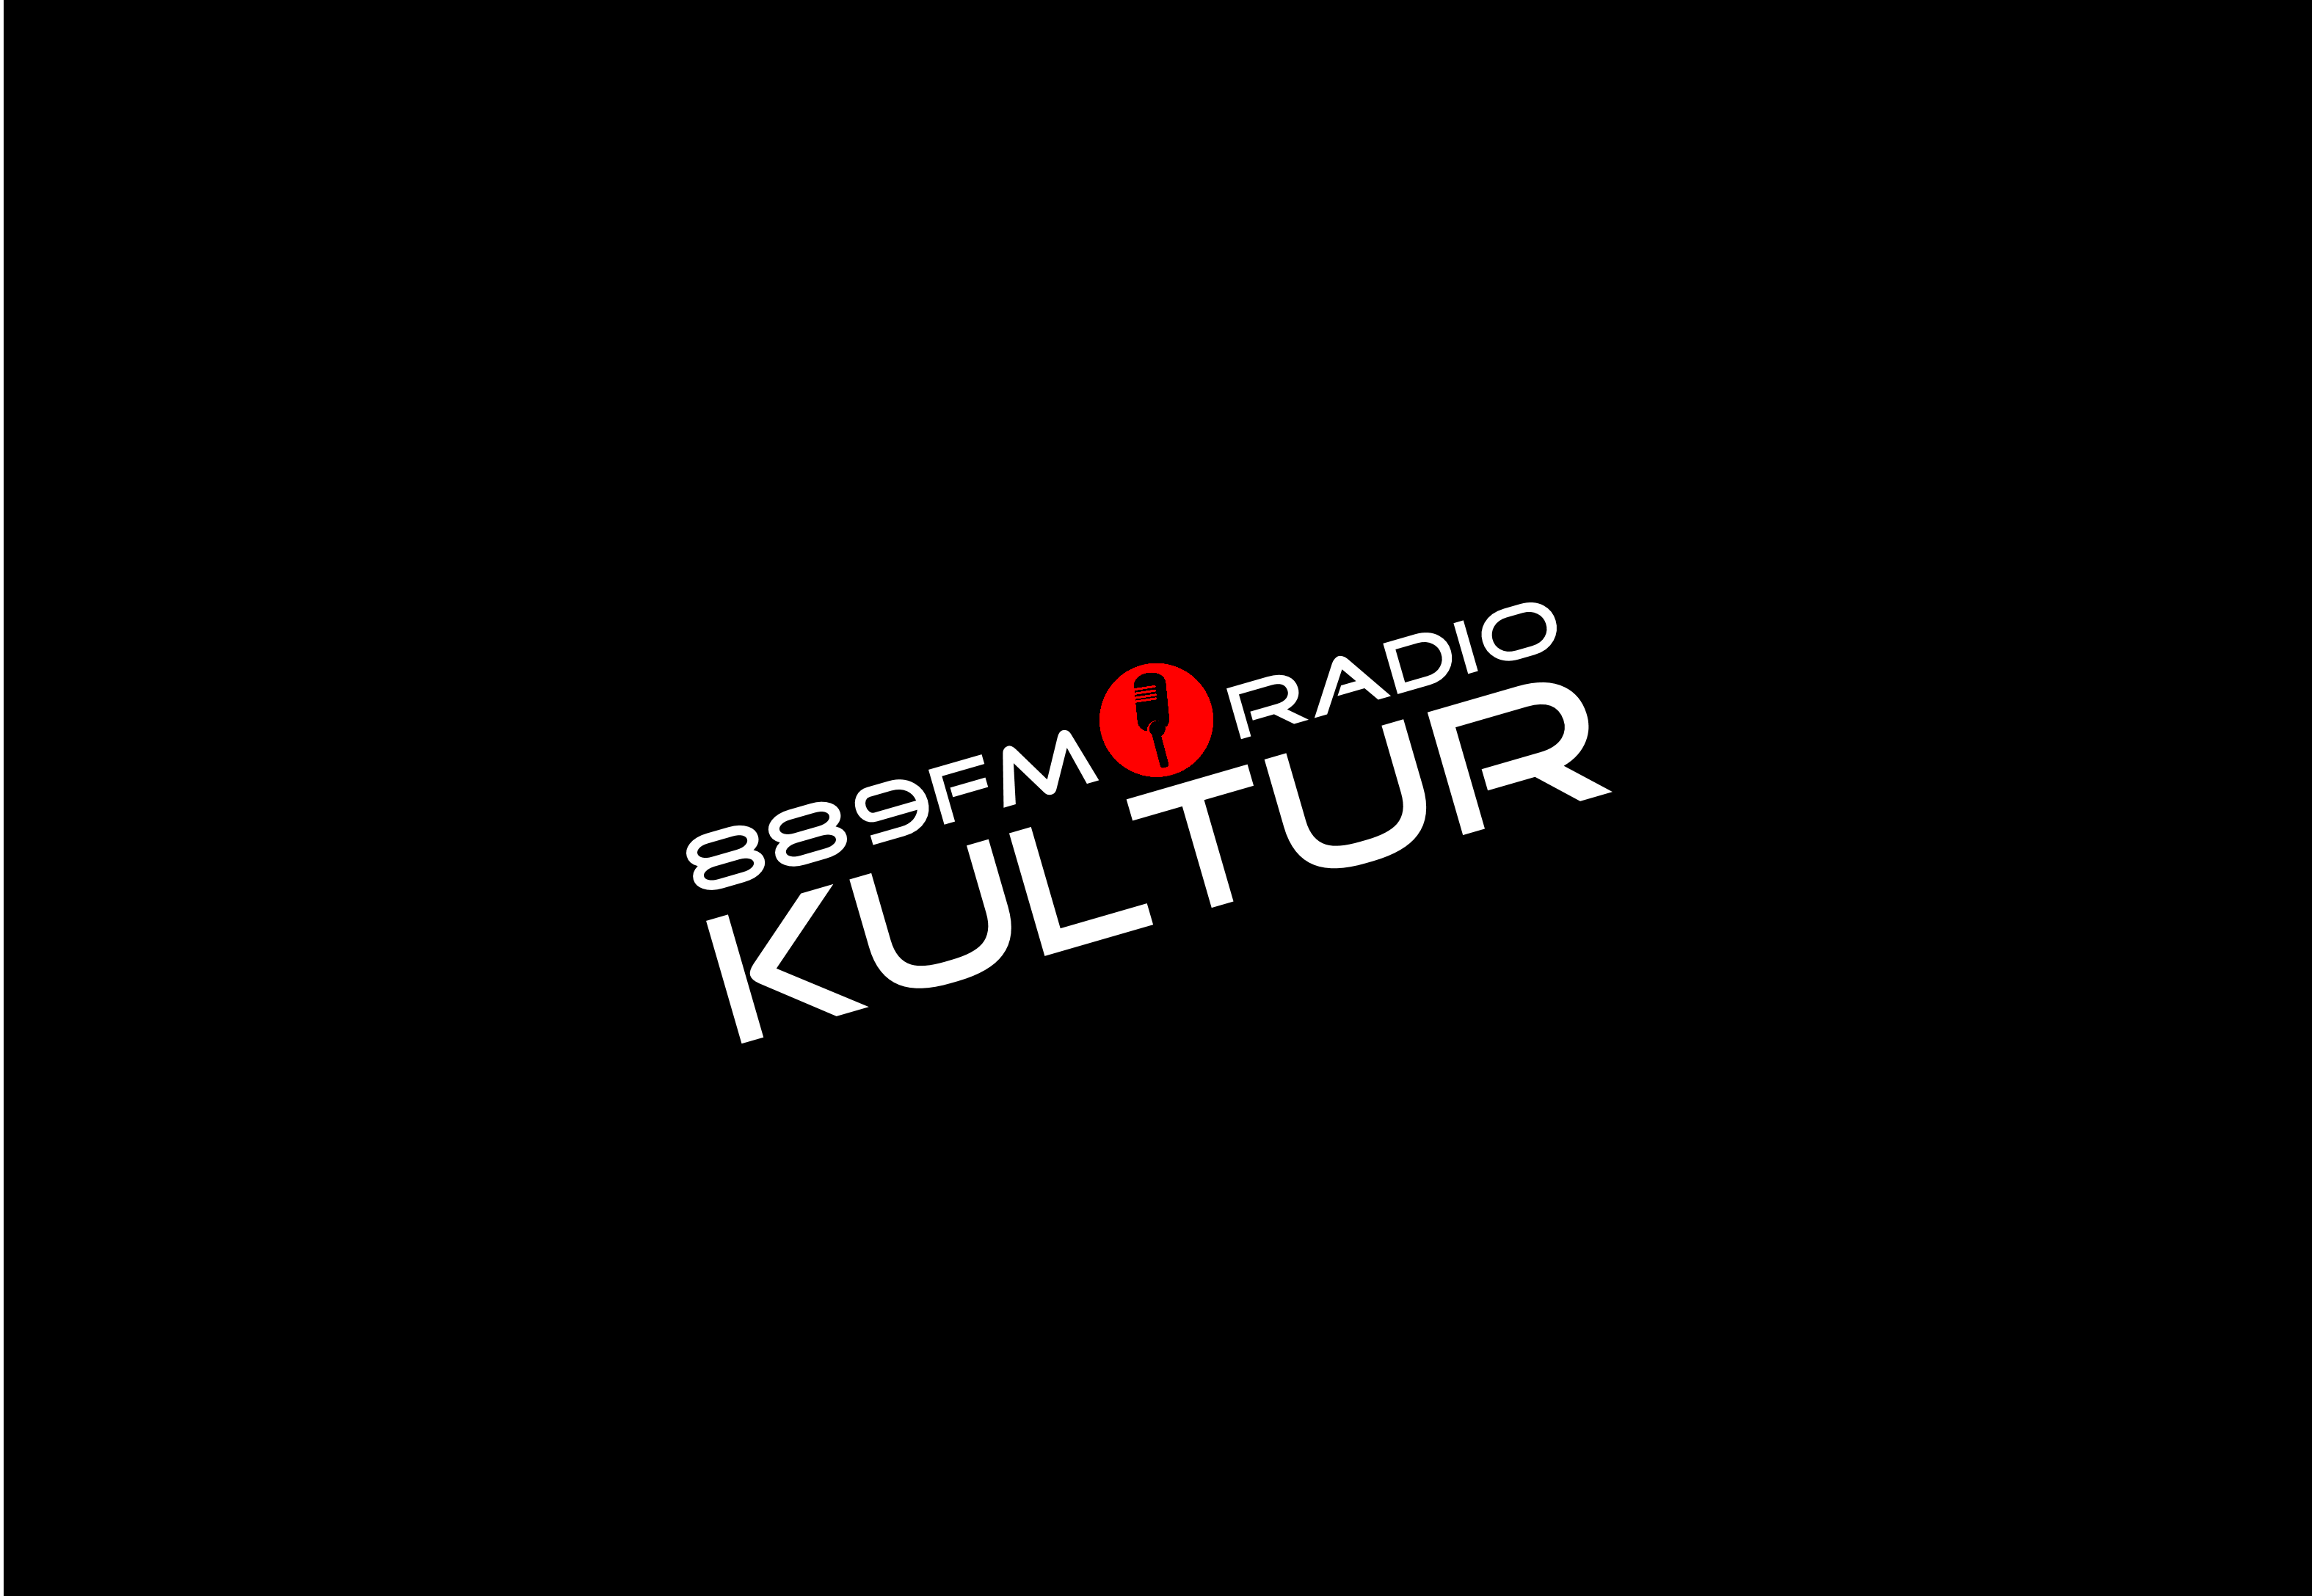 889fm Kultur, Radio 889FM